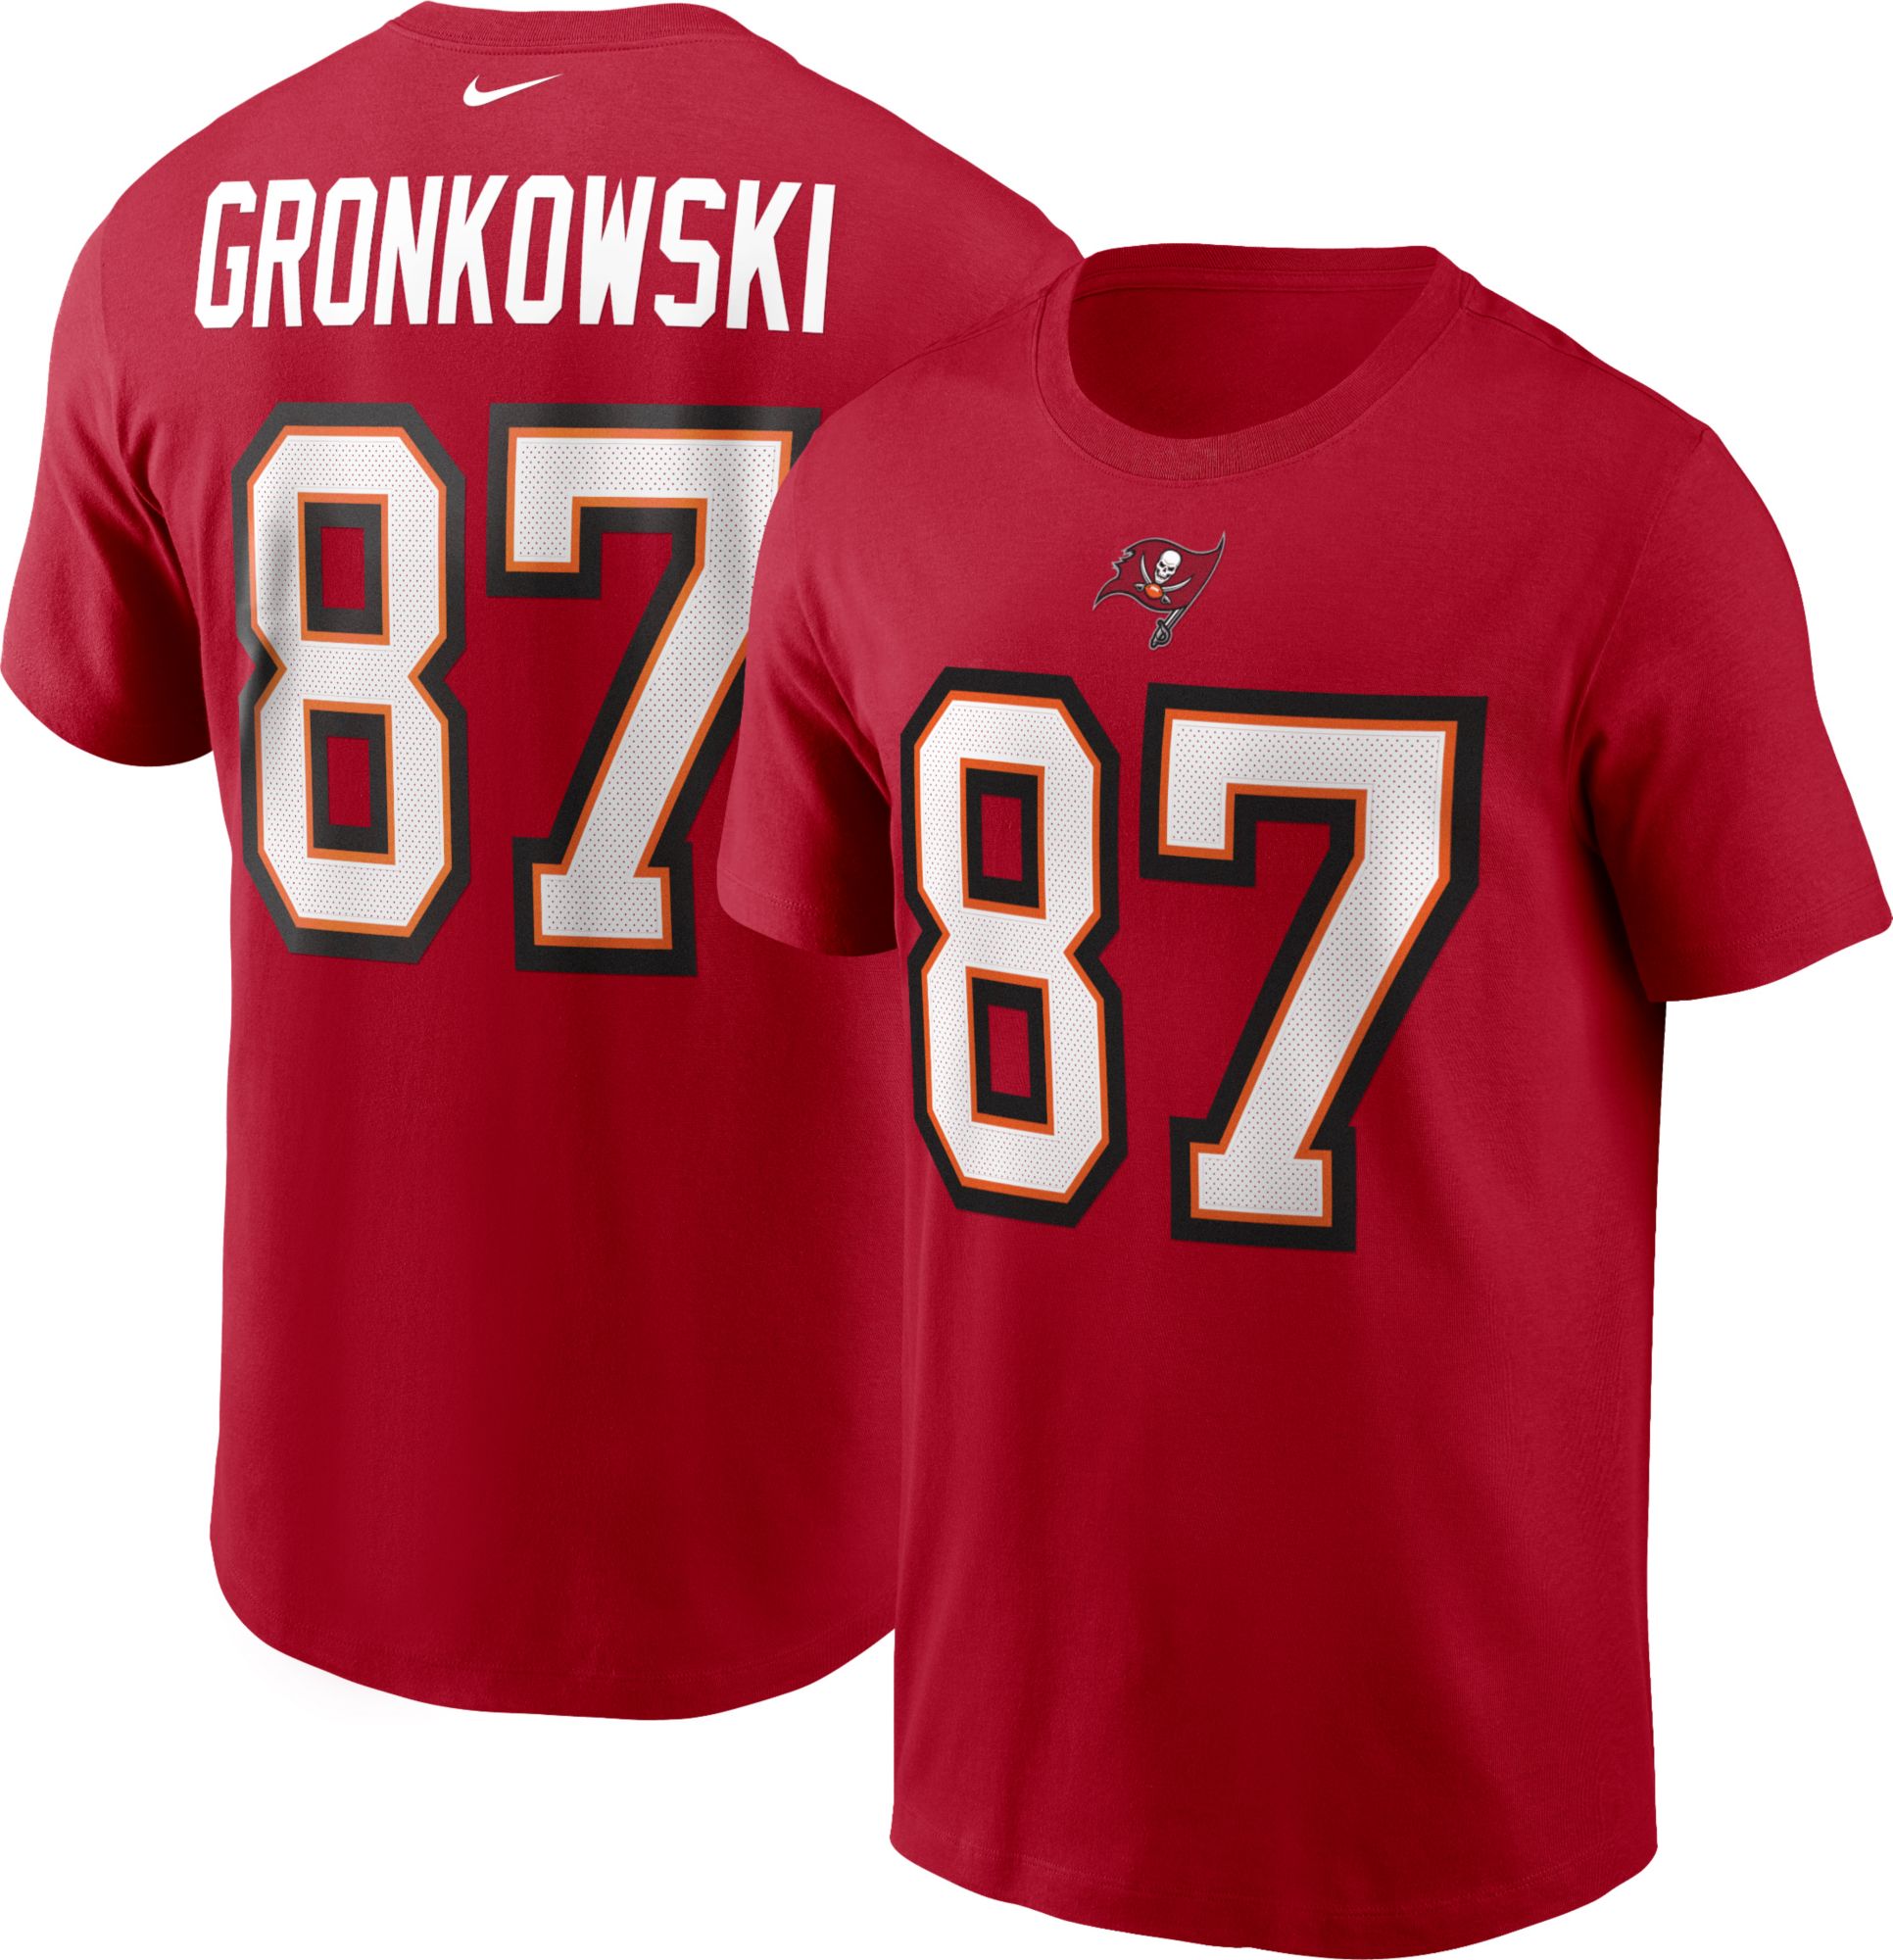 gronkowski t shirt jersey